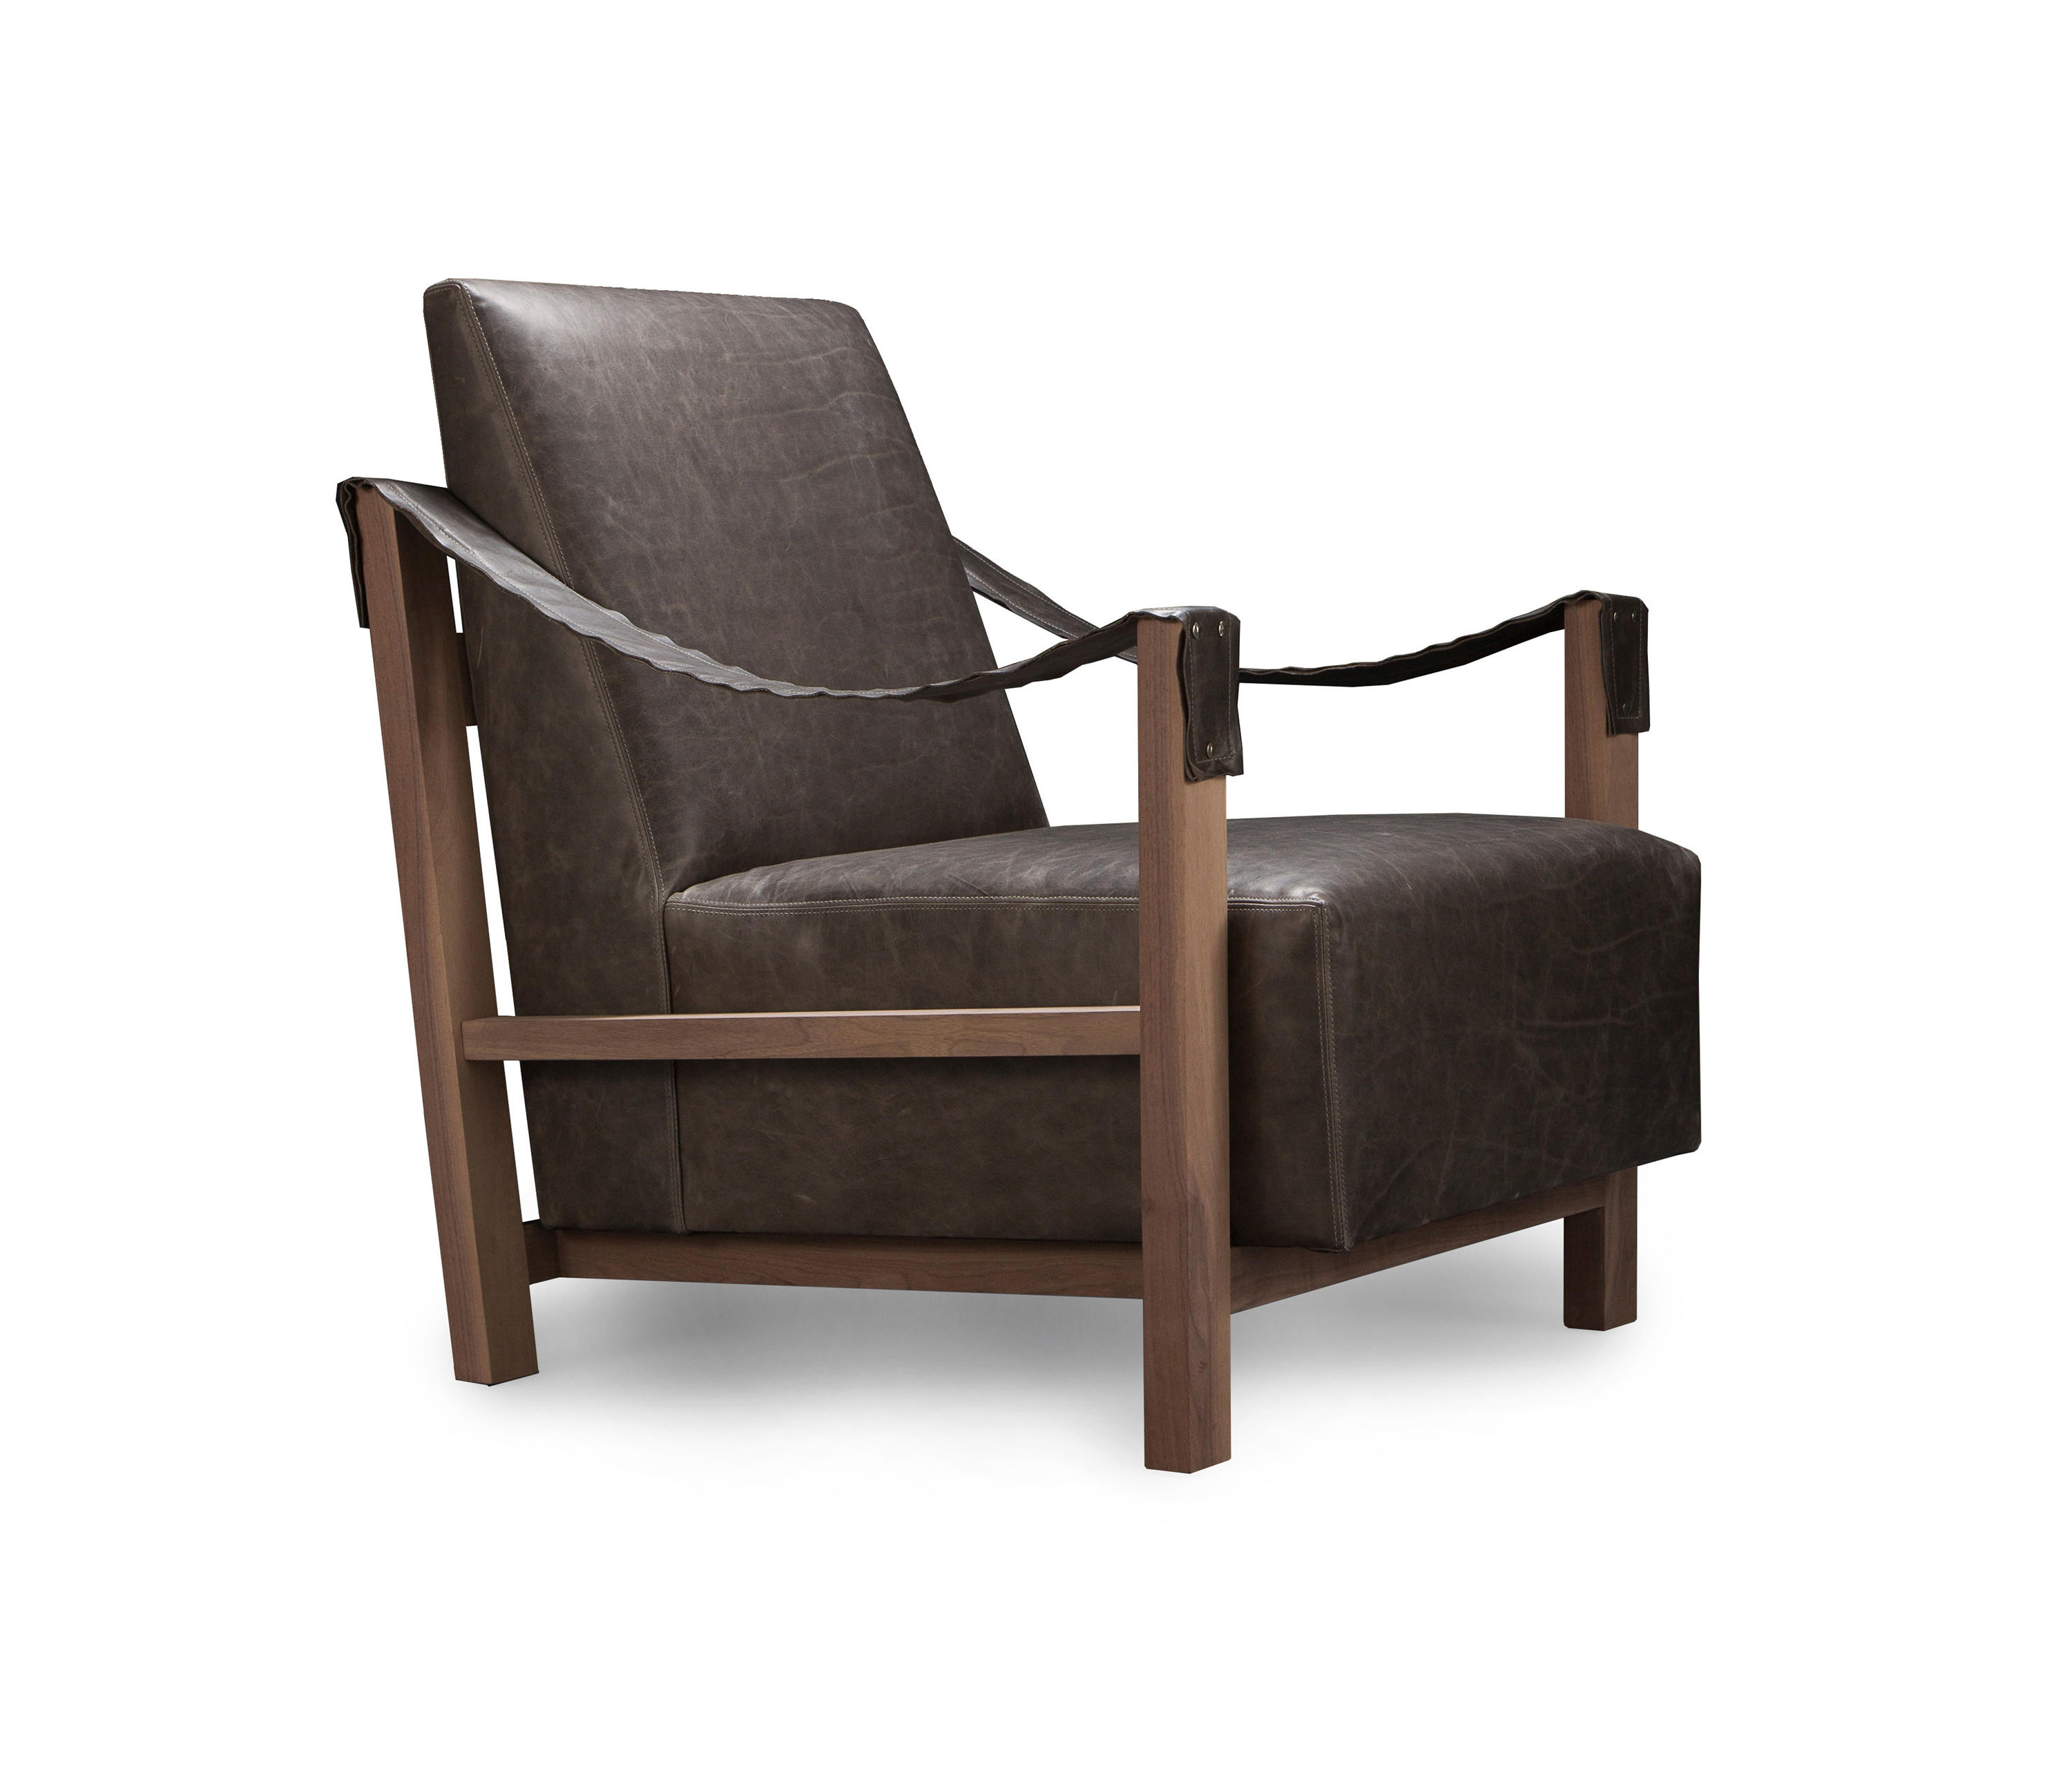 Anderson Chair Designer Furniture Architonic